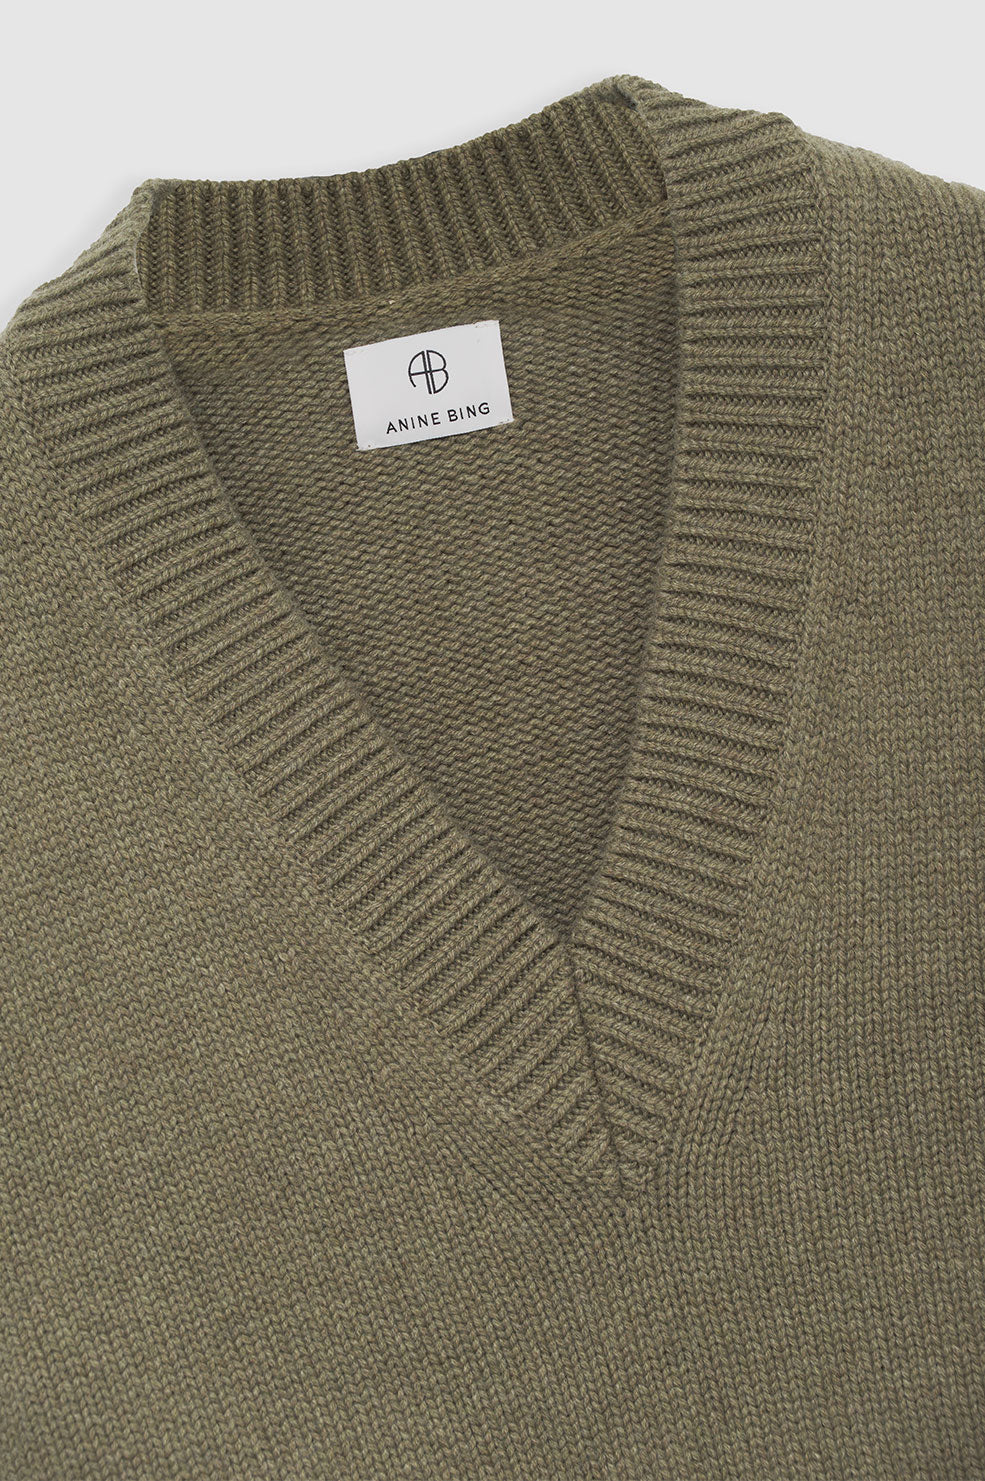 ANINE BING Rosie V Neck Sweater - Olive - Detail View